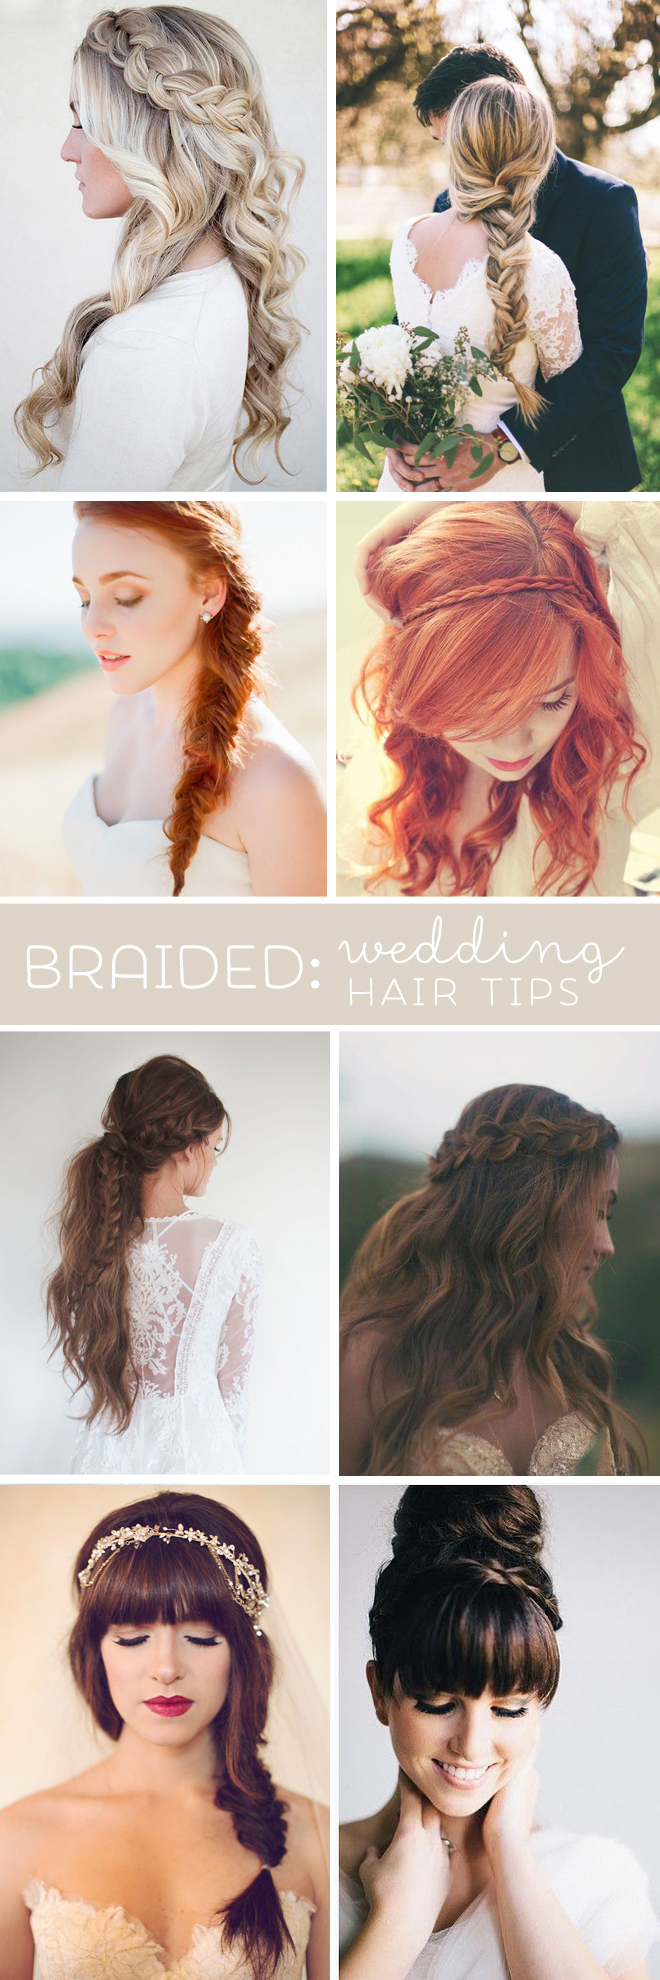 Wedding hair tips for "braids"